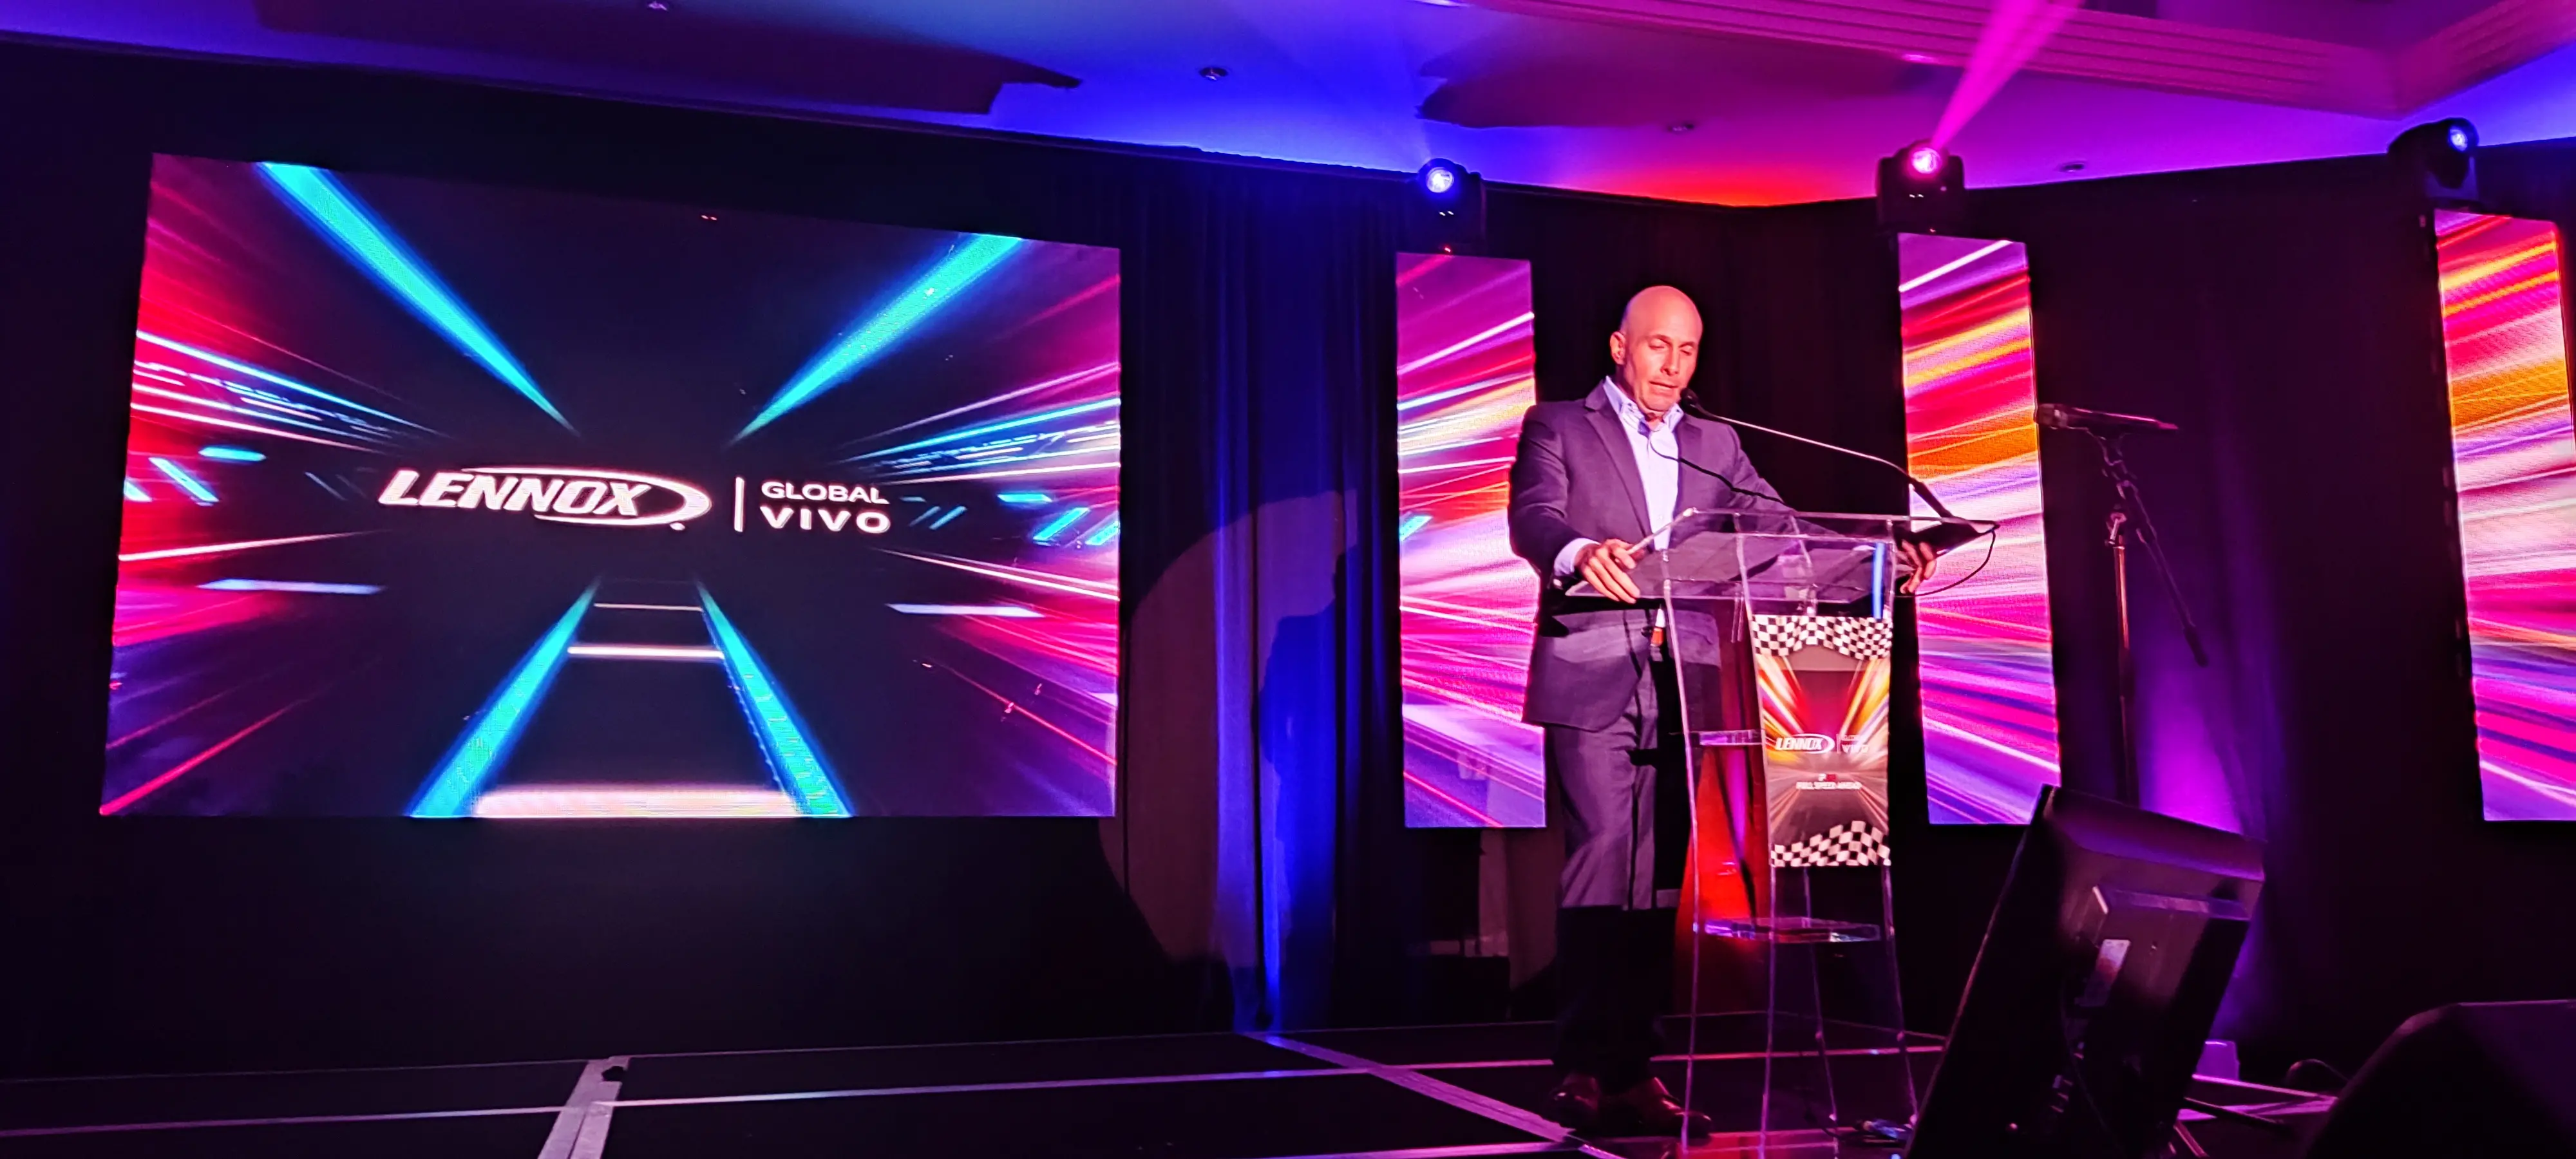 Lennox Global VIVO 2022 - Award Ceremony